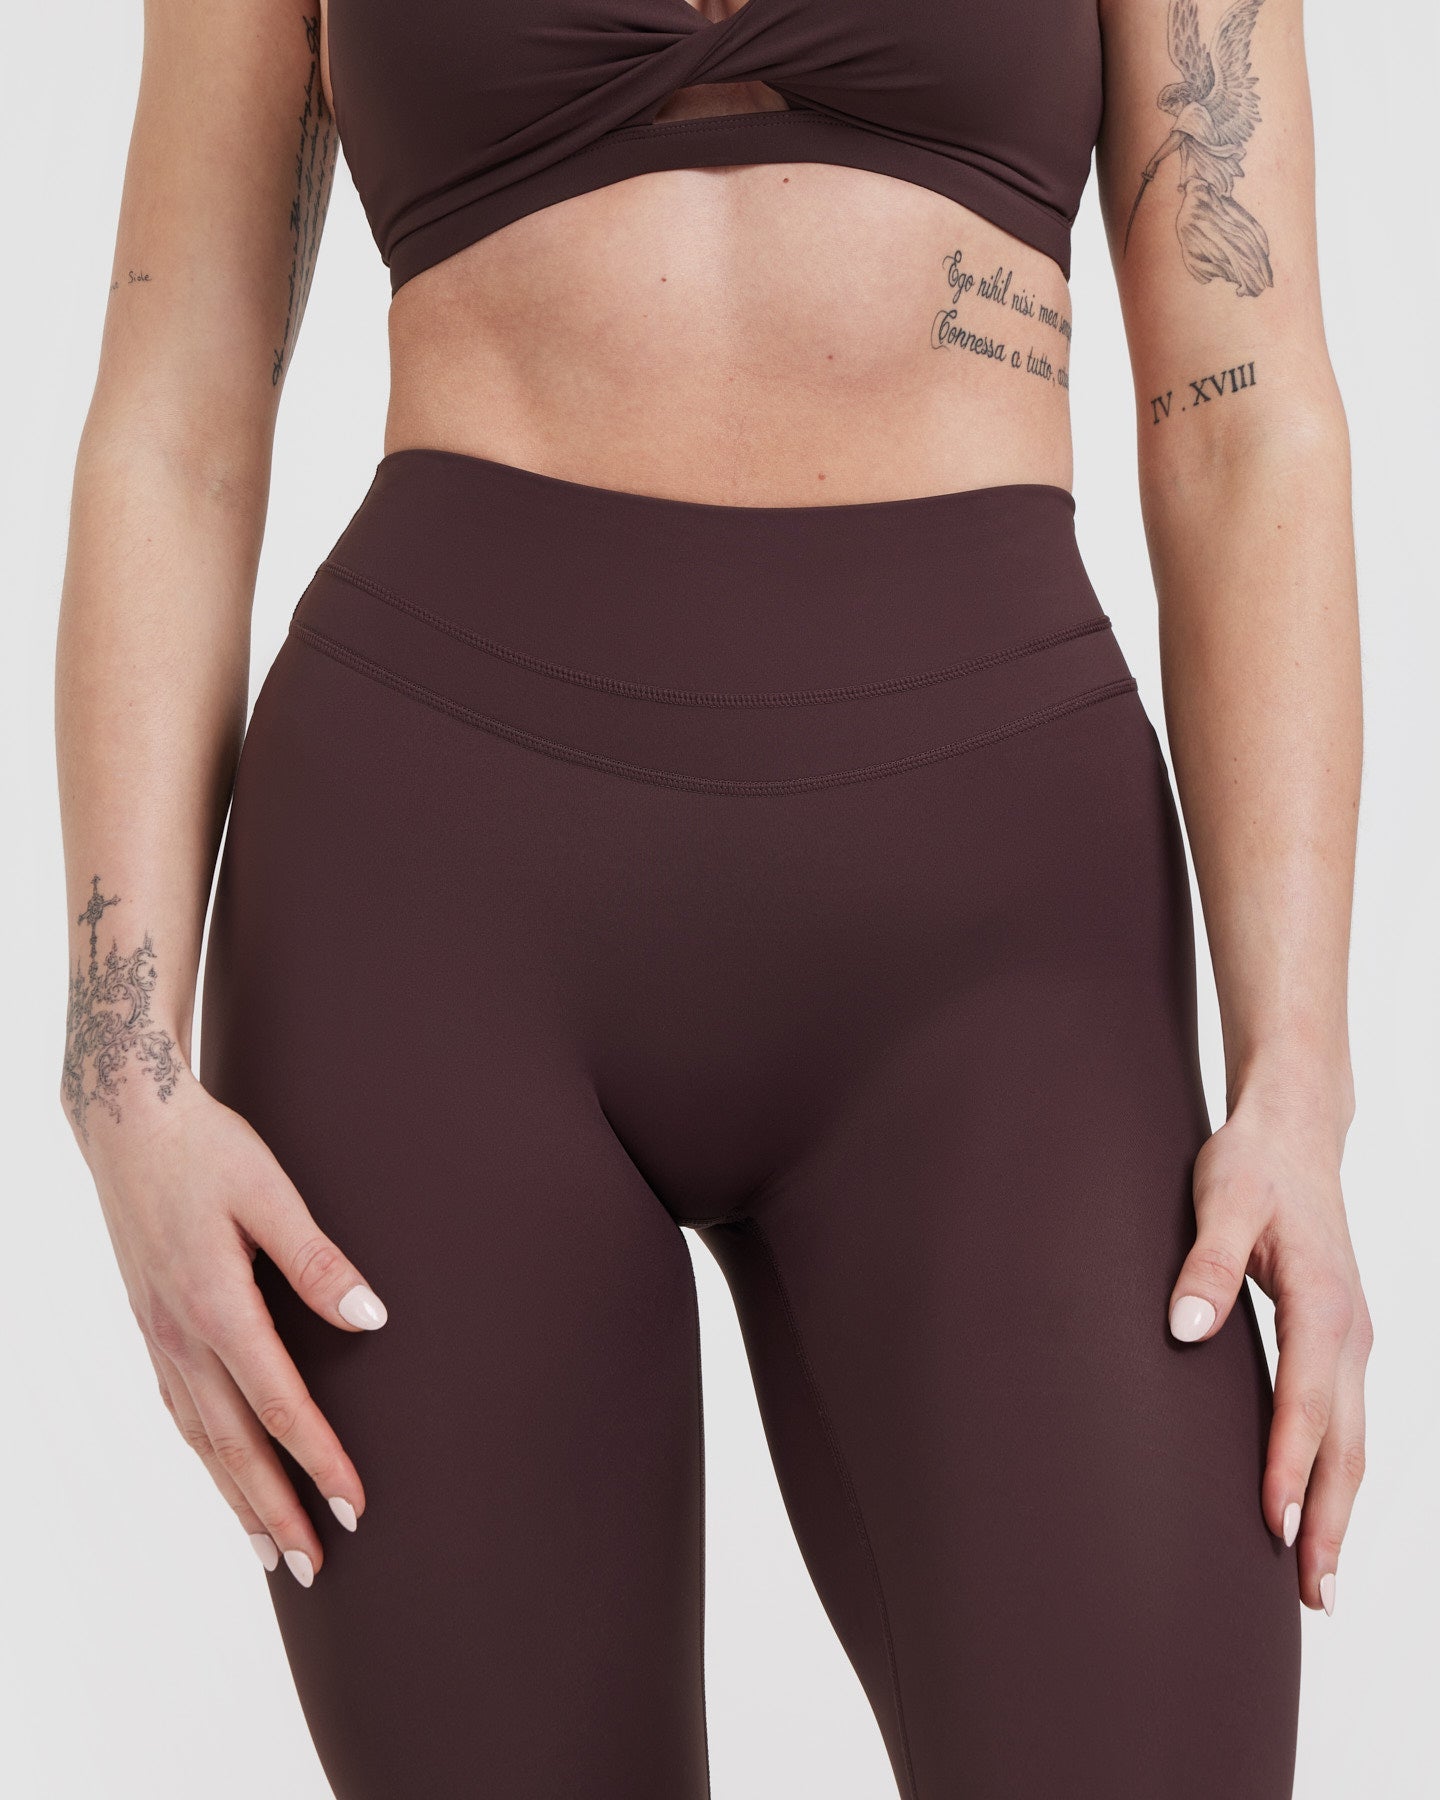 High waist thermal leggings curvy in dark brown, 4.99€ | Celestino